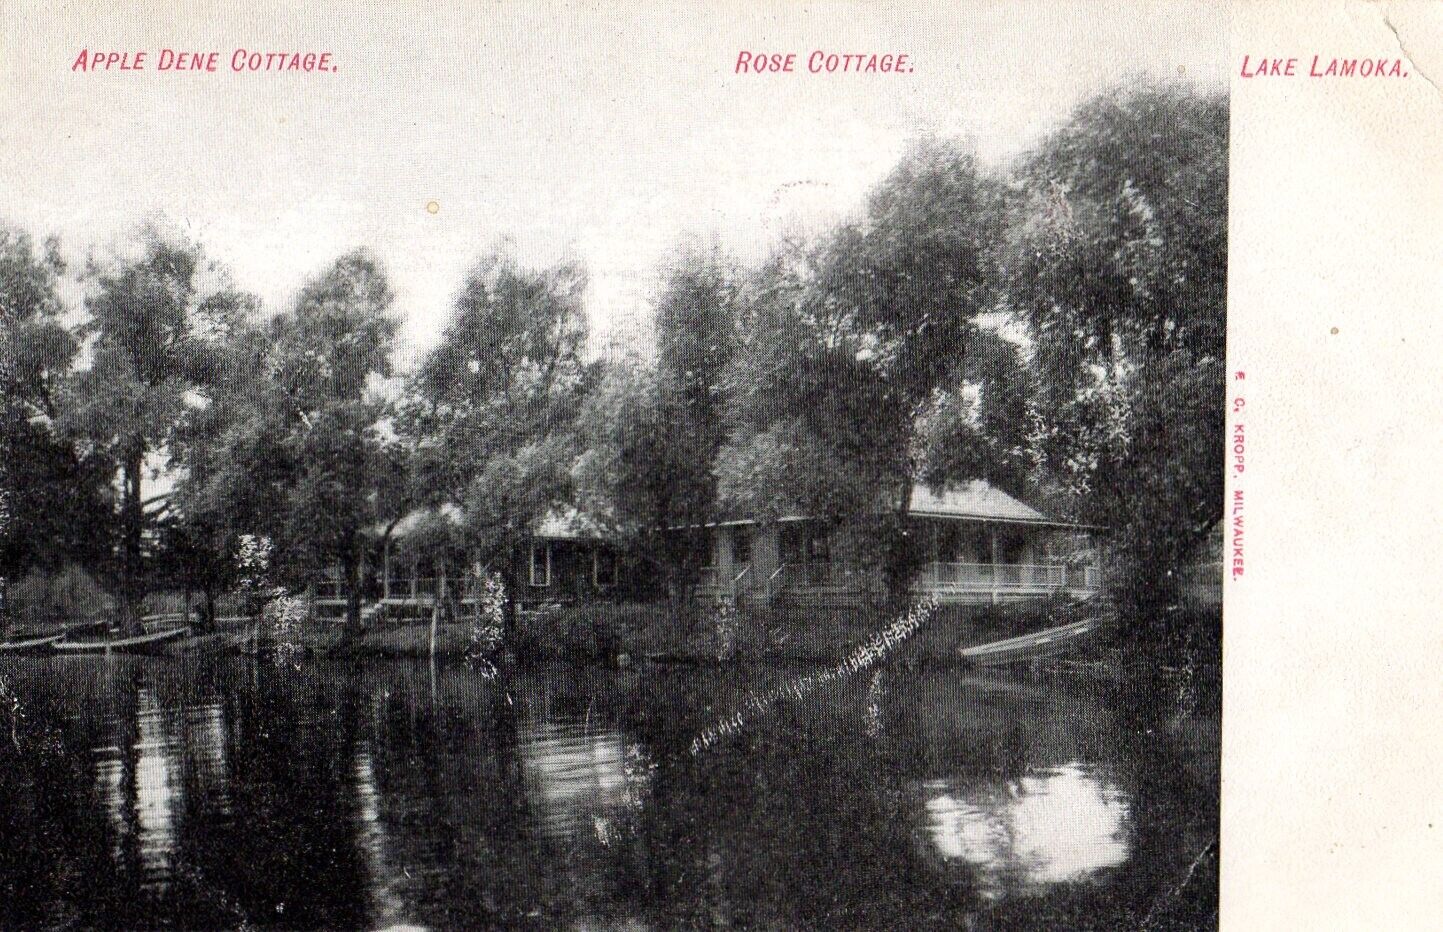 Apple Dean Cottage & Rose Cottage at Lake Lamoka NY Pre 1908